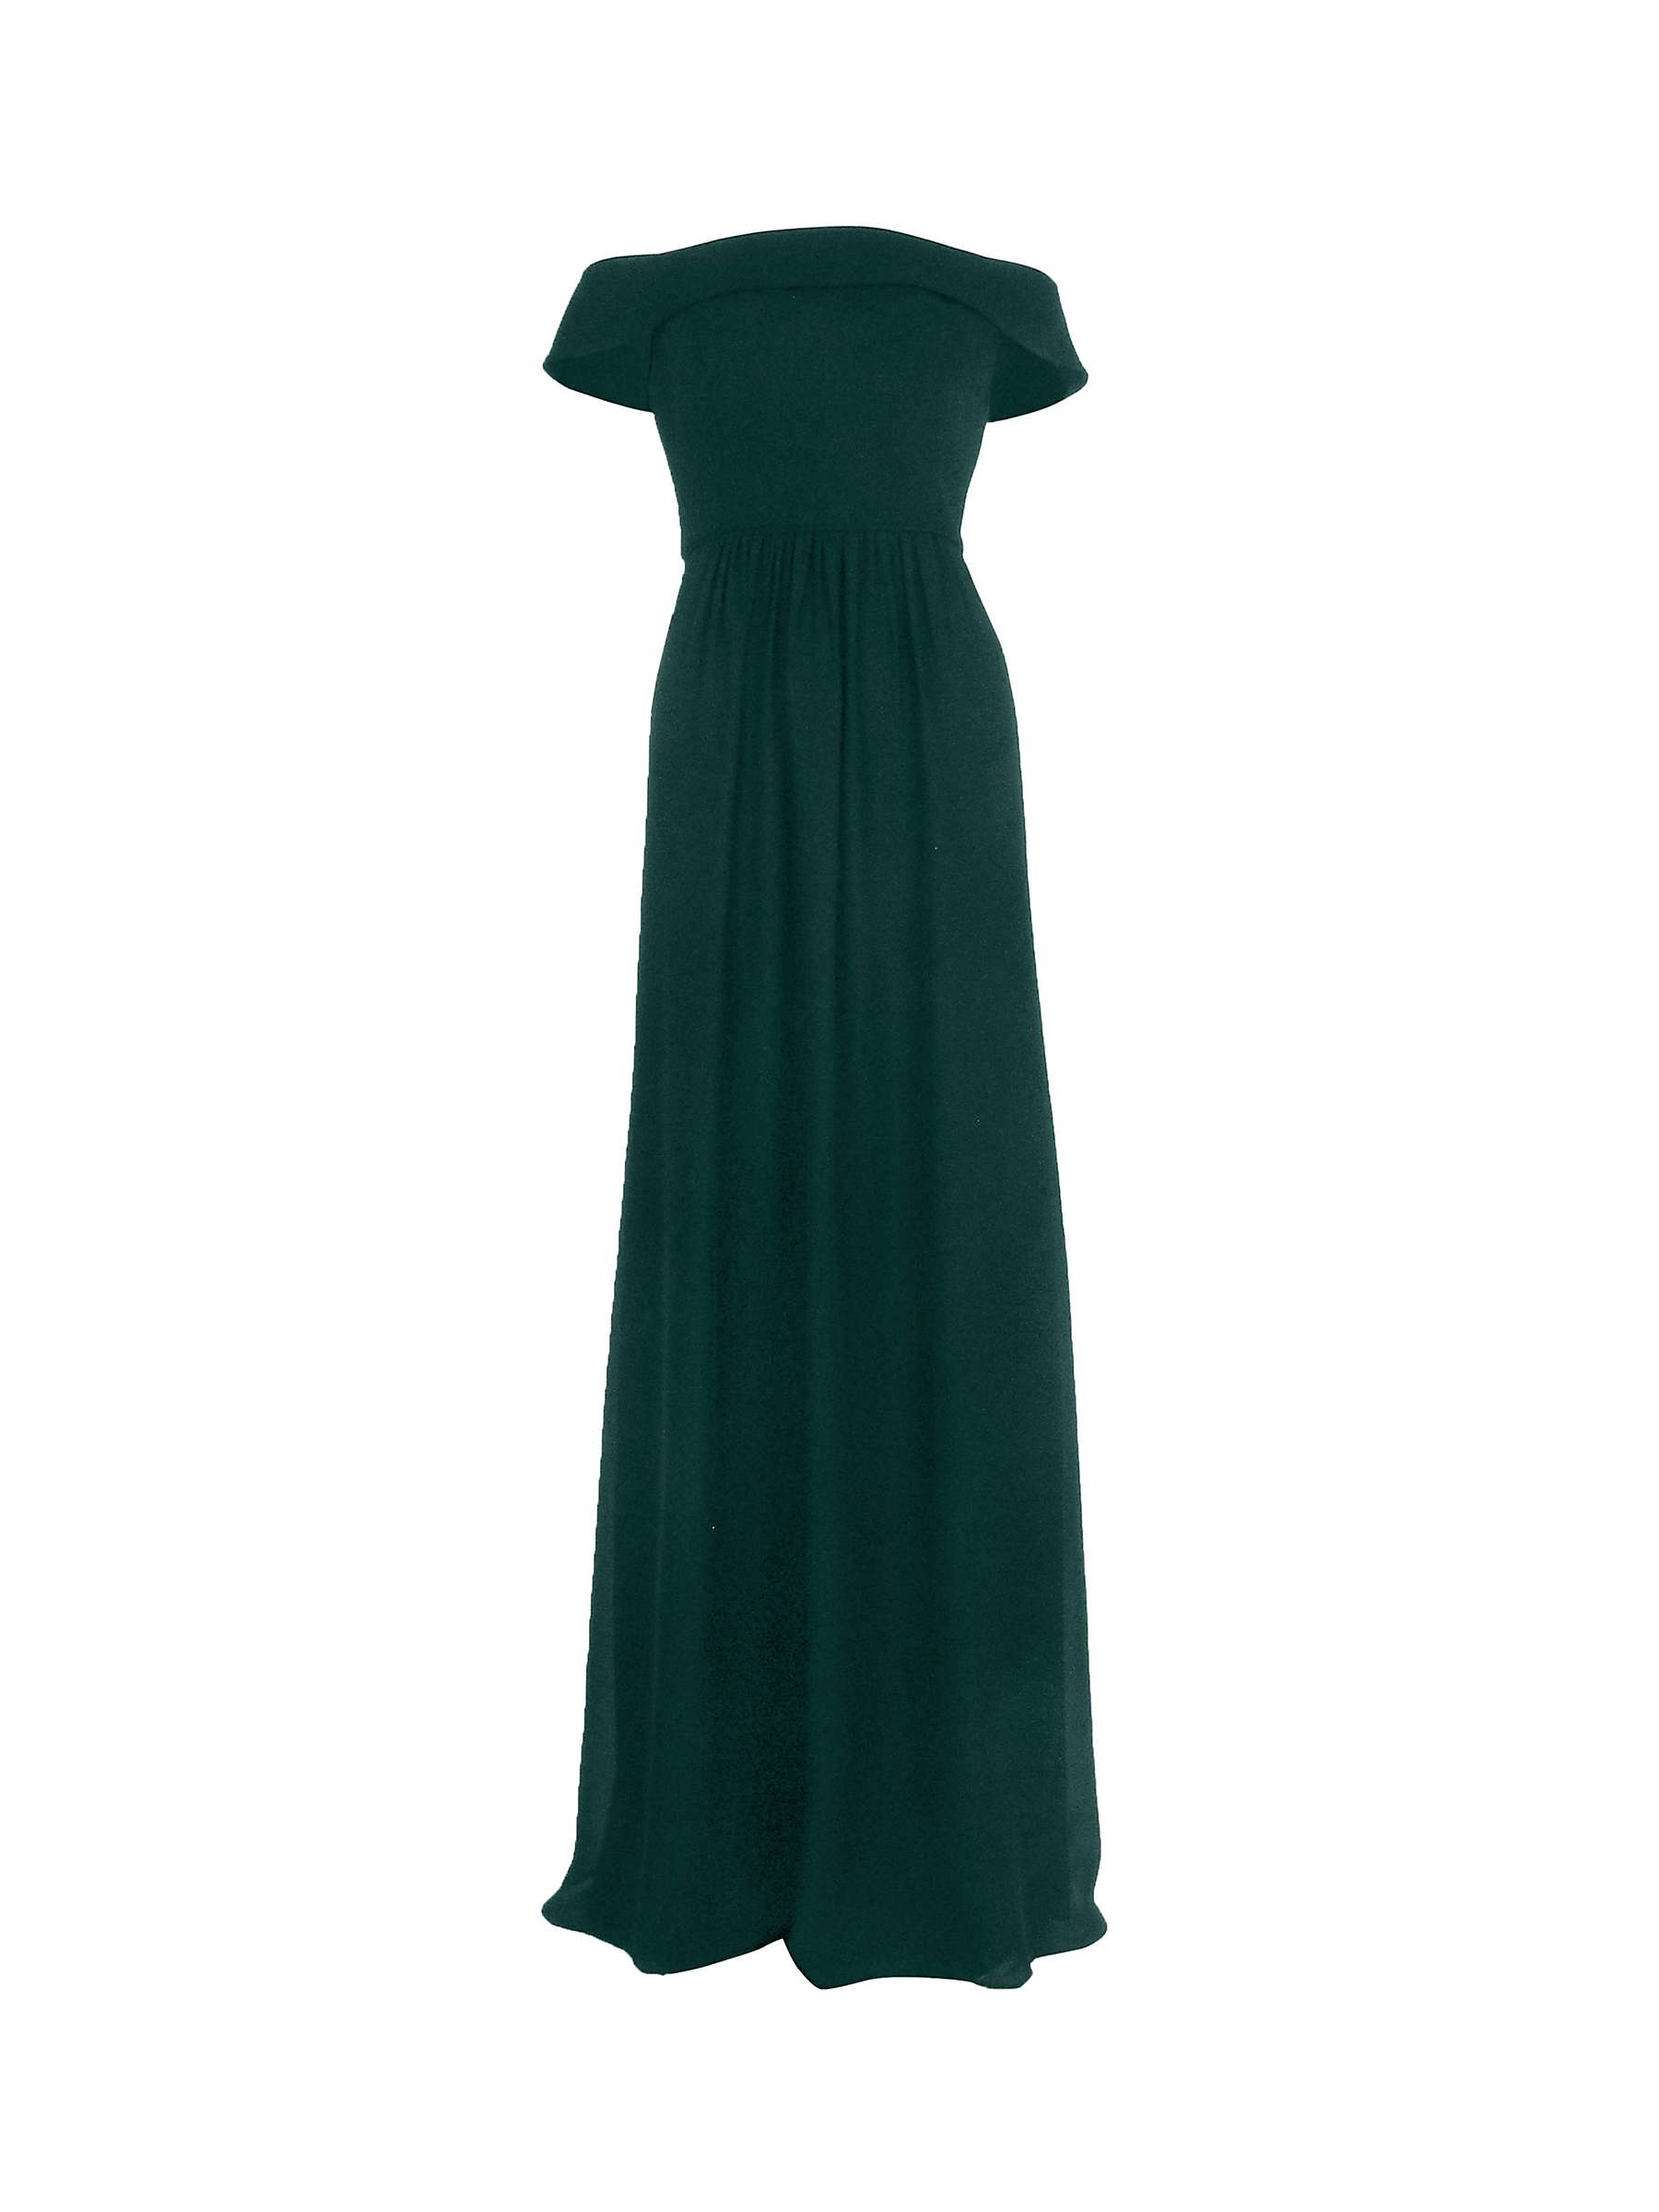 Buy Adrianna Papell Crepe Chiffon Maxi Dress, Hunter Online at johnlewis.com